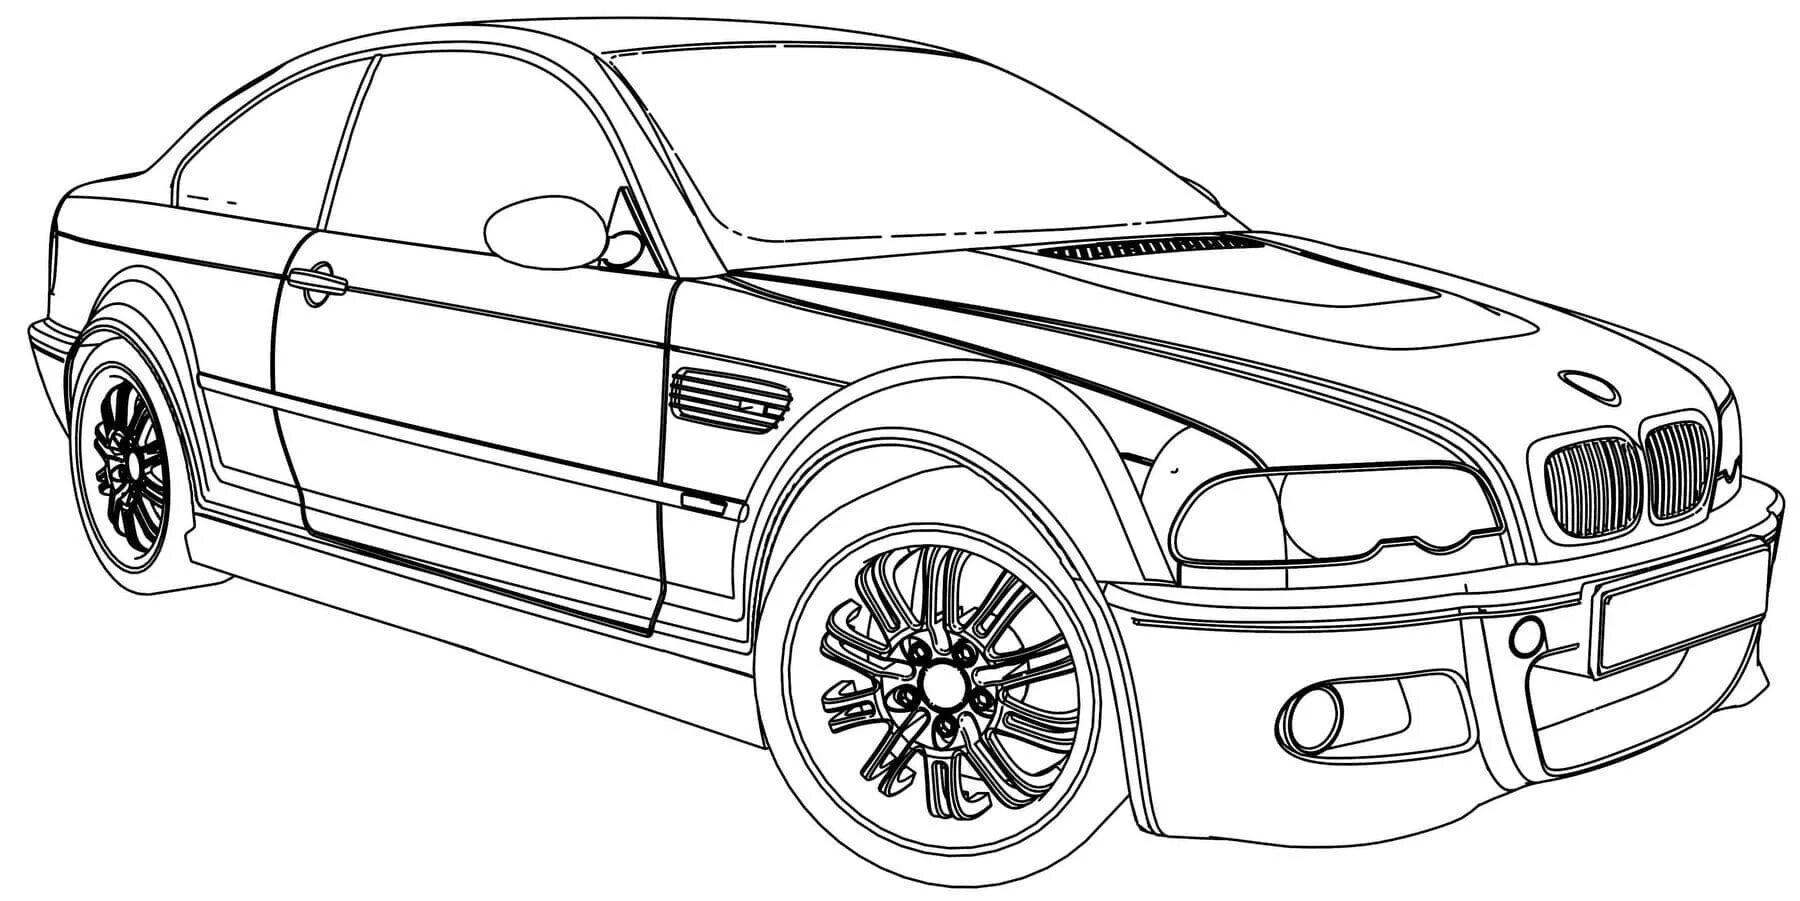 Coloring color tuning. Раскраска BMW m3 GTR. Раскраска БМВ м5. Машина БМВ м5. Раскраска машина БМВ е39.